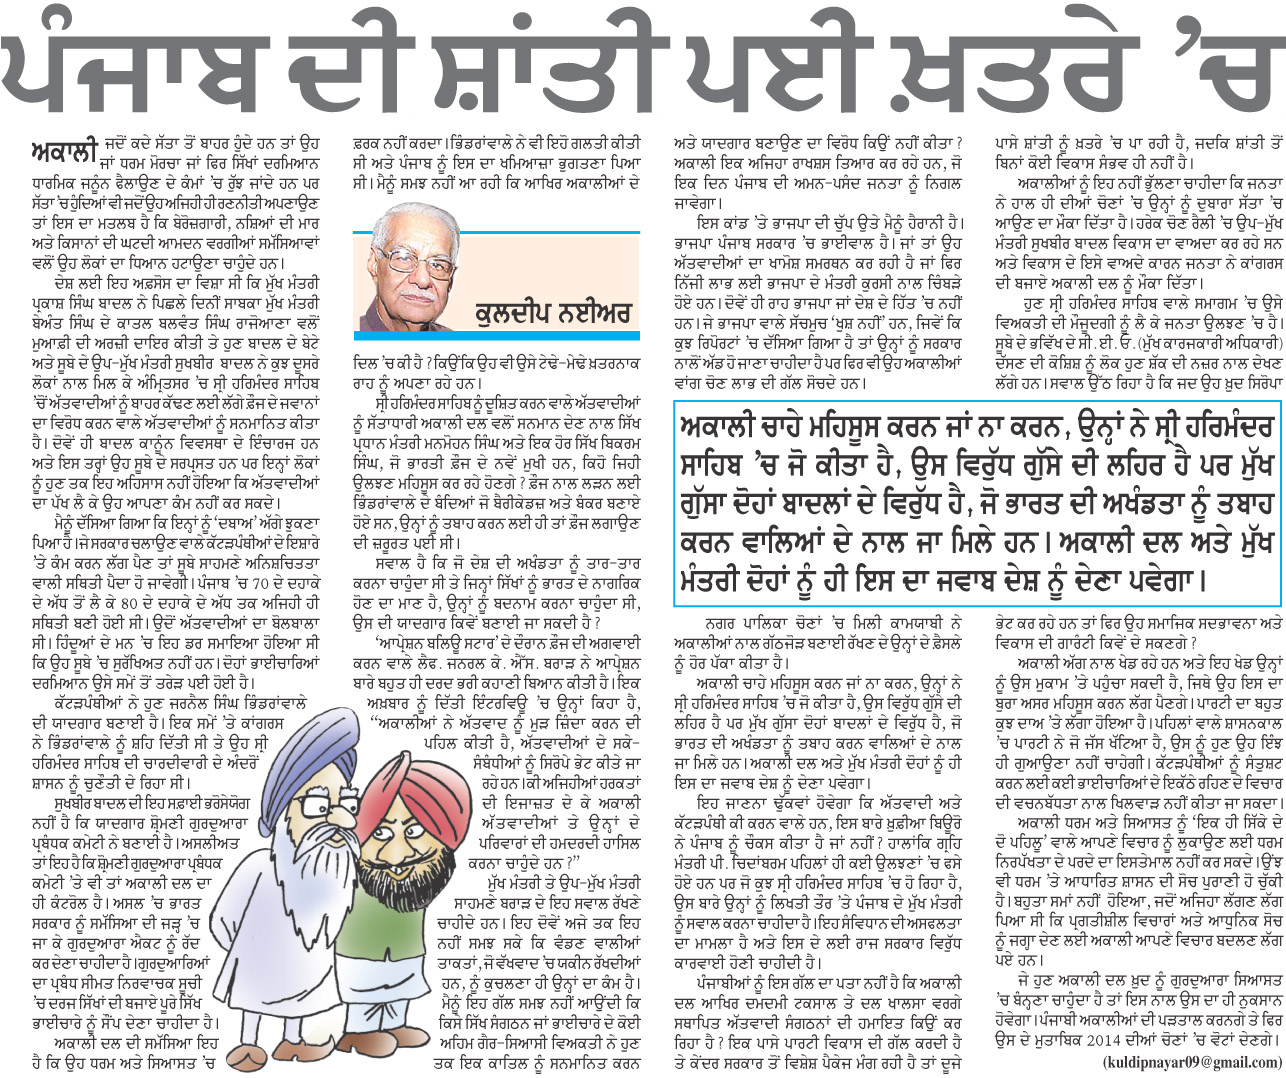 Kuldip Nayar's article opposing Sikh memorial for Saka Darbar Sahib (1984). This article was published in Jag Bani newspaper on June 20, 2012. Click on Image for Larger view.